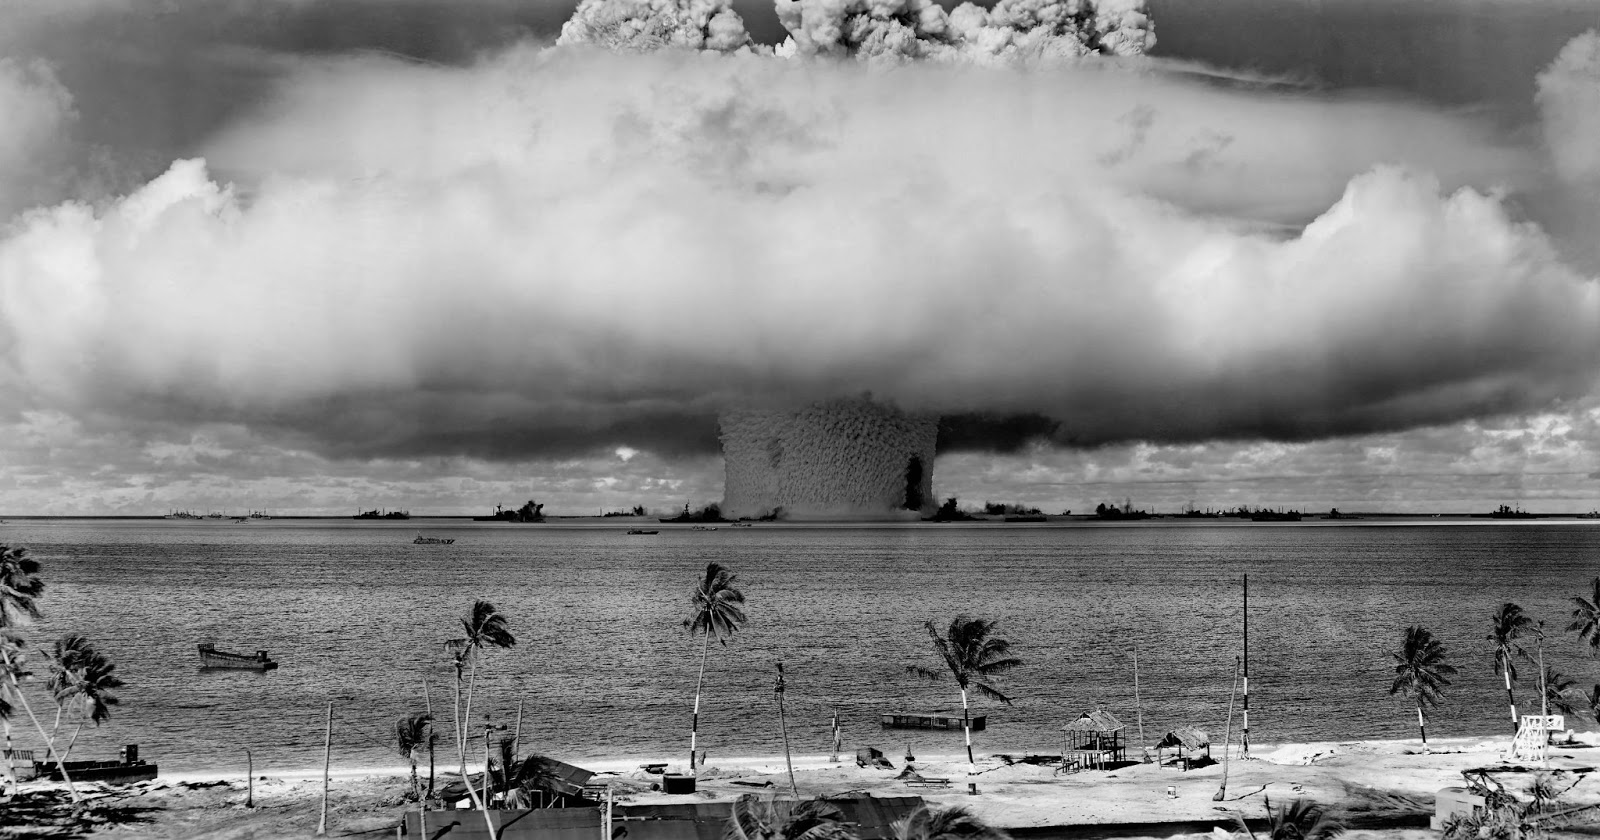 11 - Underwater detonation of 15 kiloton nuclear weapon